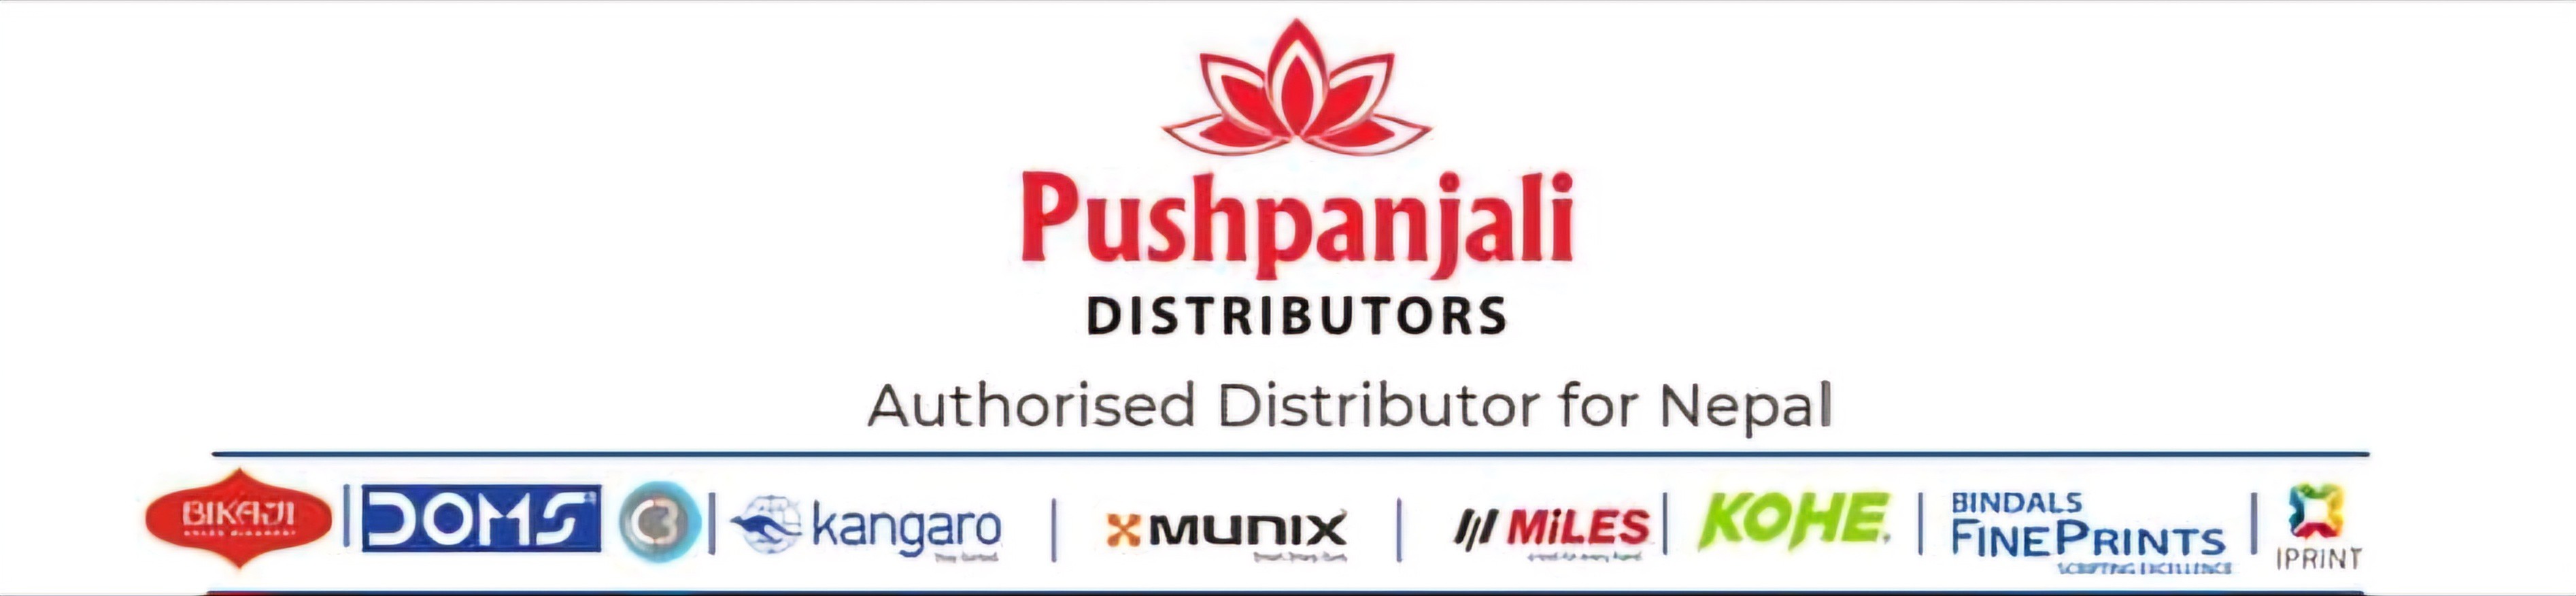 Pushpanjali Distributors banner